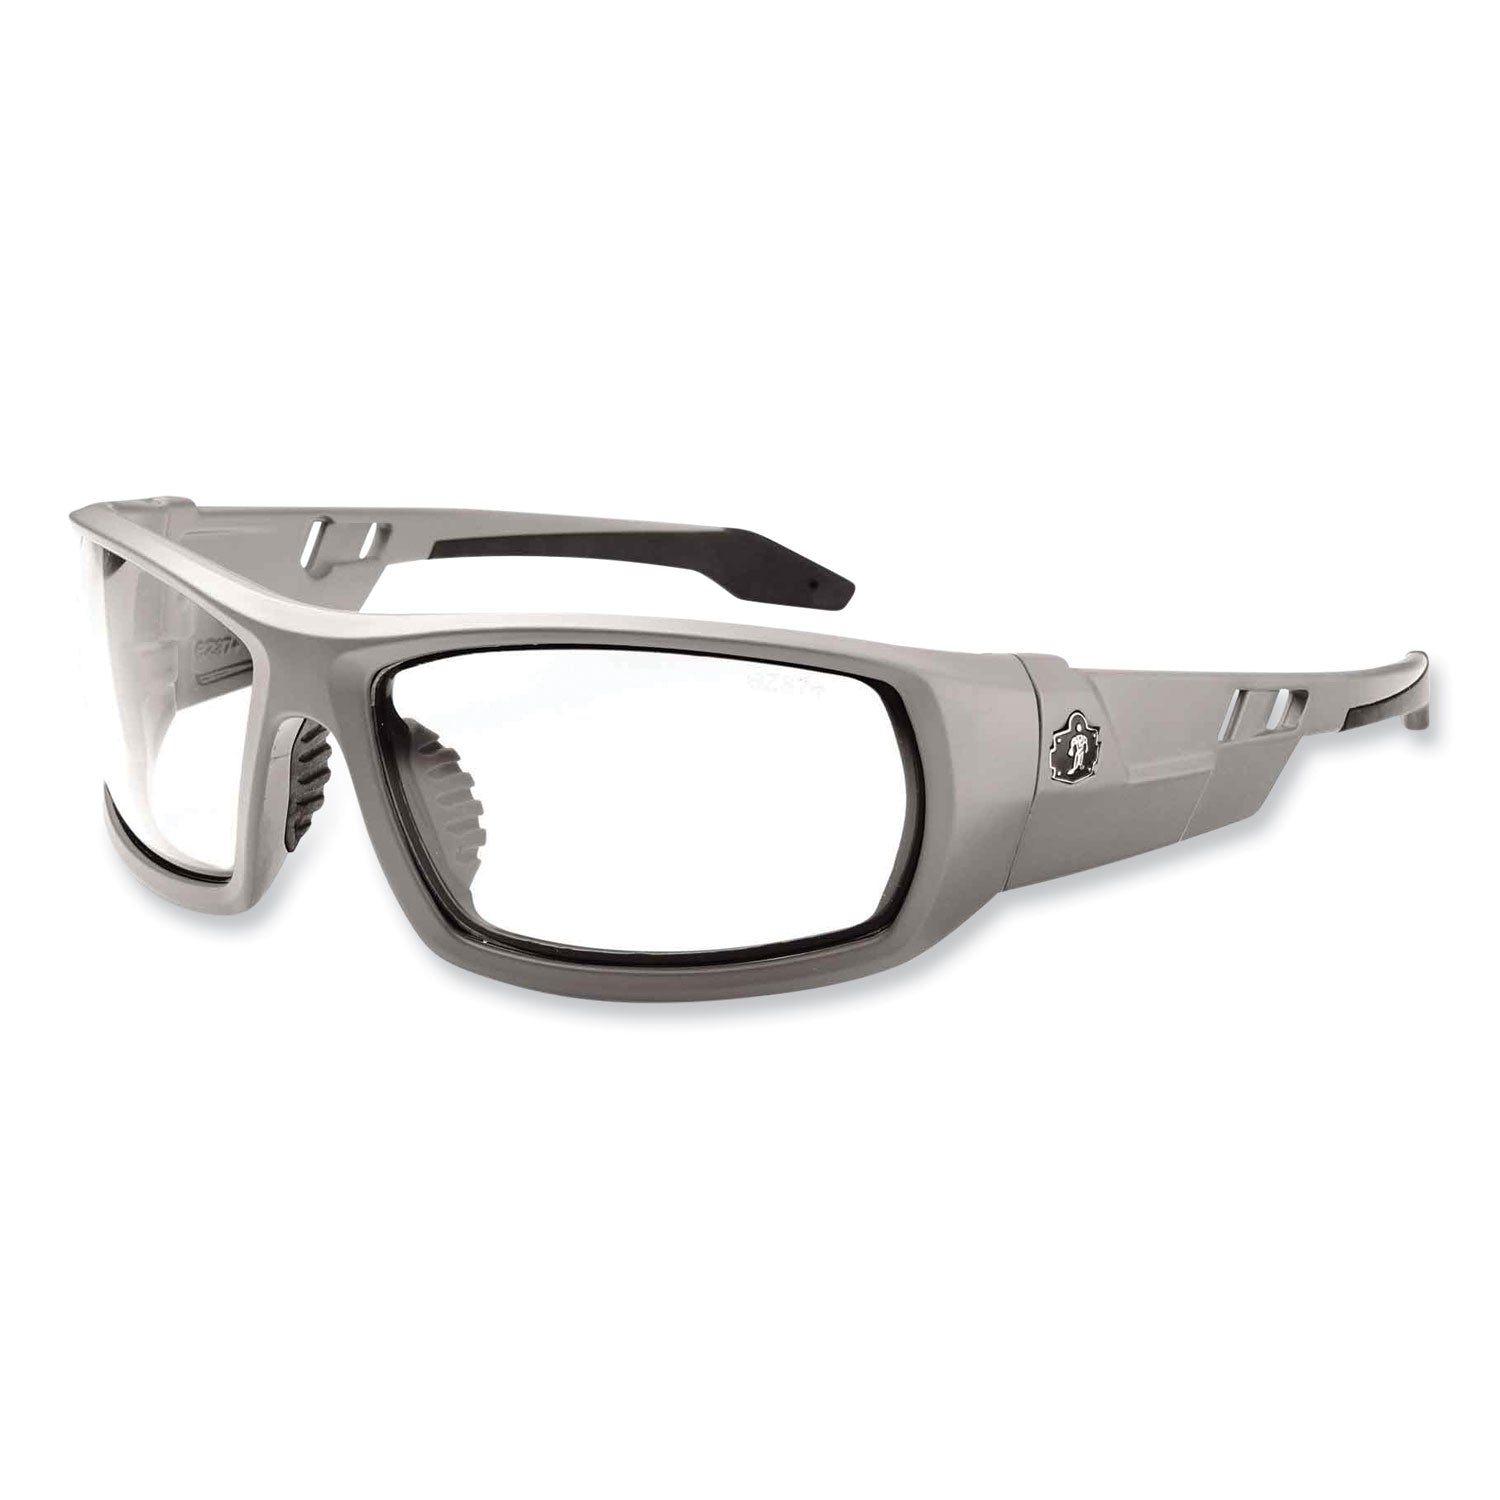 skullerz-odin-safety-glasses-matte-gray-nylon-impact-frame-clear-polycarbonate-lens-ships-in-1-3-business-days_ego50100 - 1